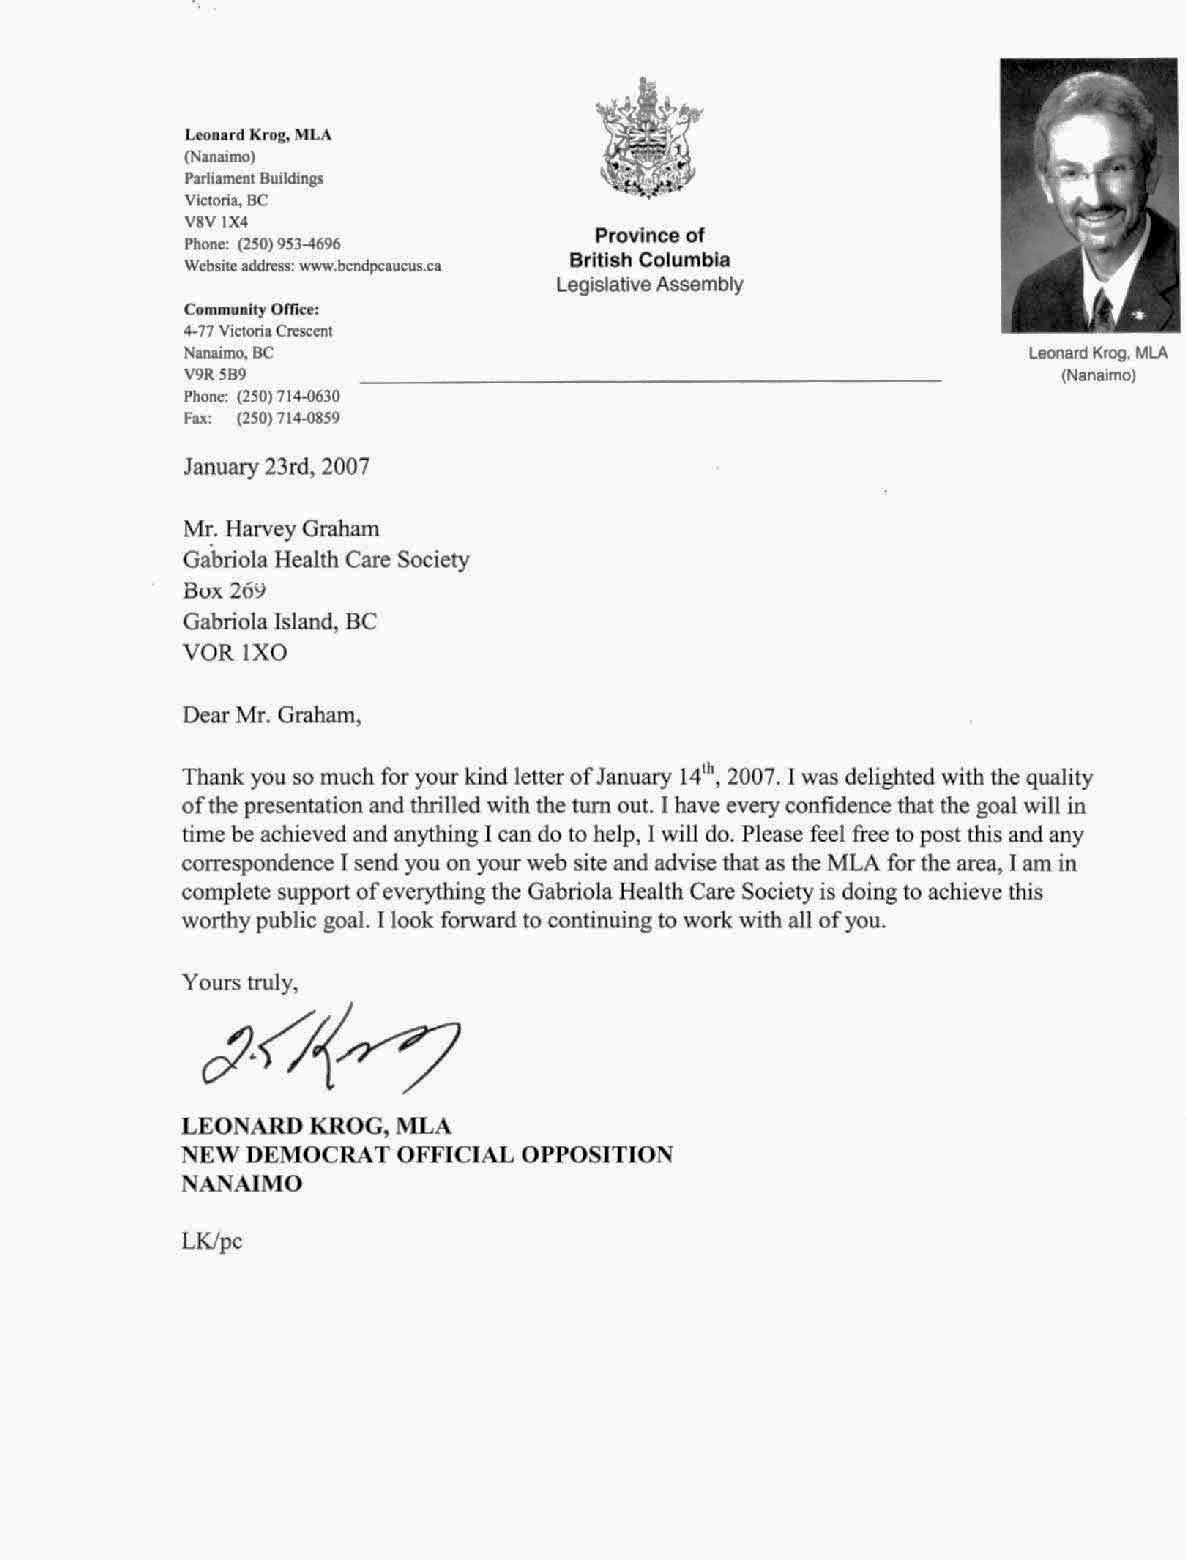 Letter of support from Leonard Krog, MLA